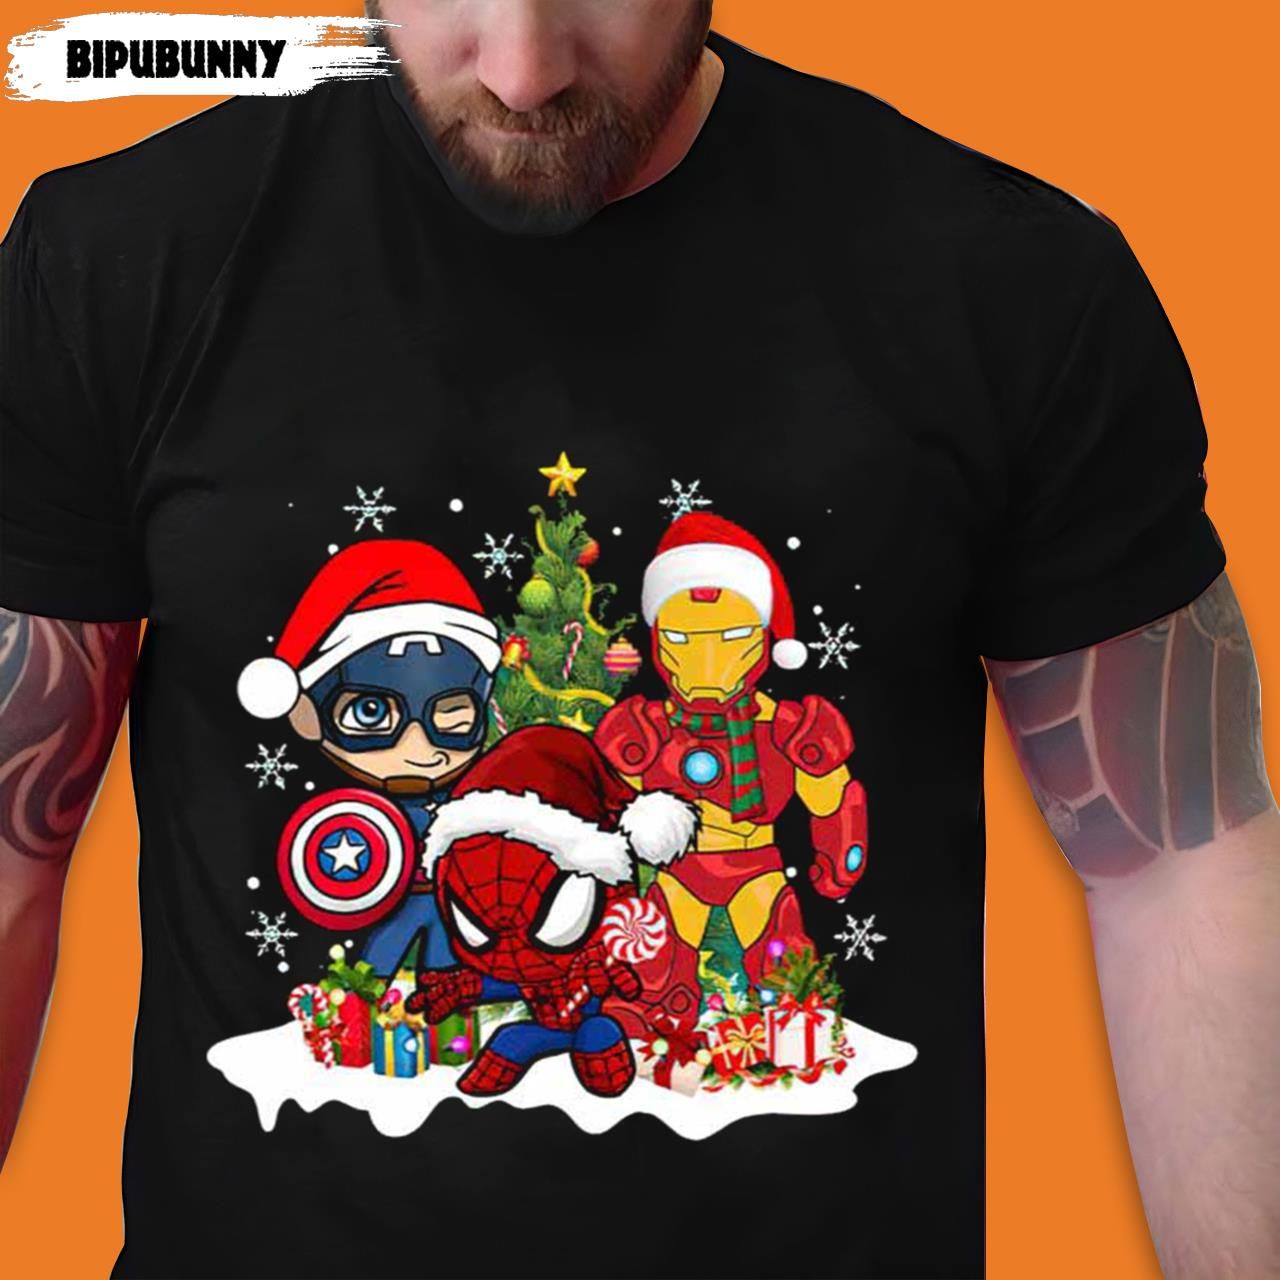 Christmas America Christmas BipuBunny Man Captain Marvel Store Spider Ironman Avengers - T- Shirt